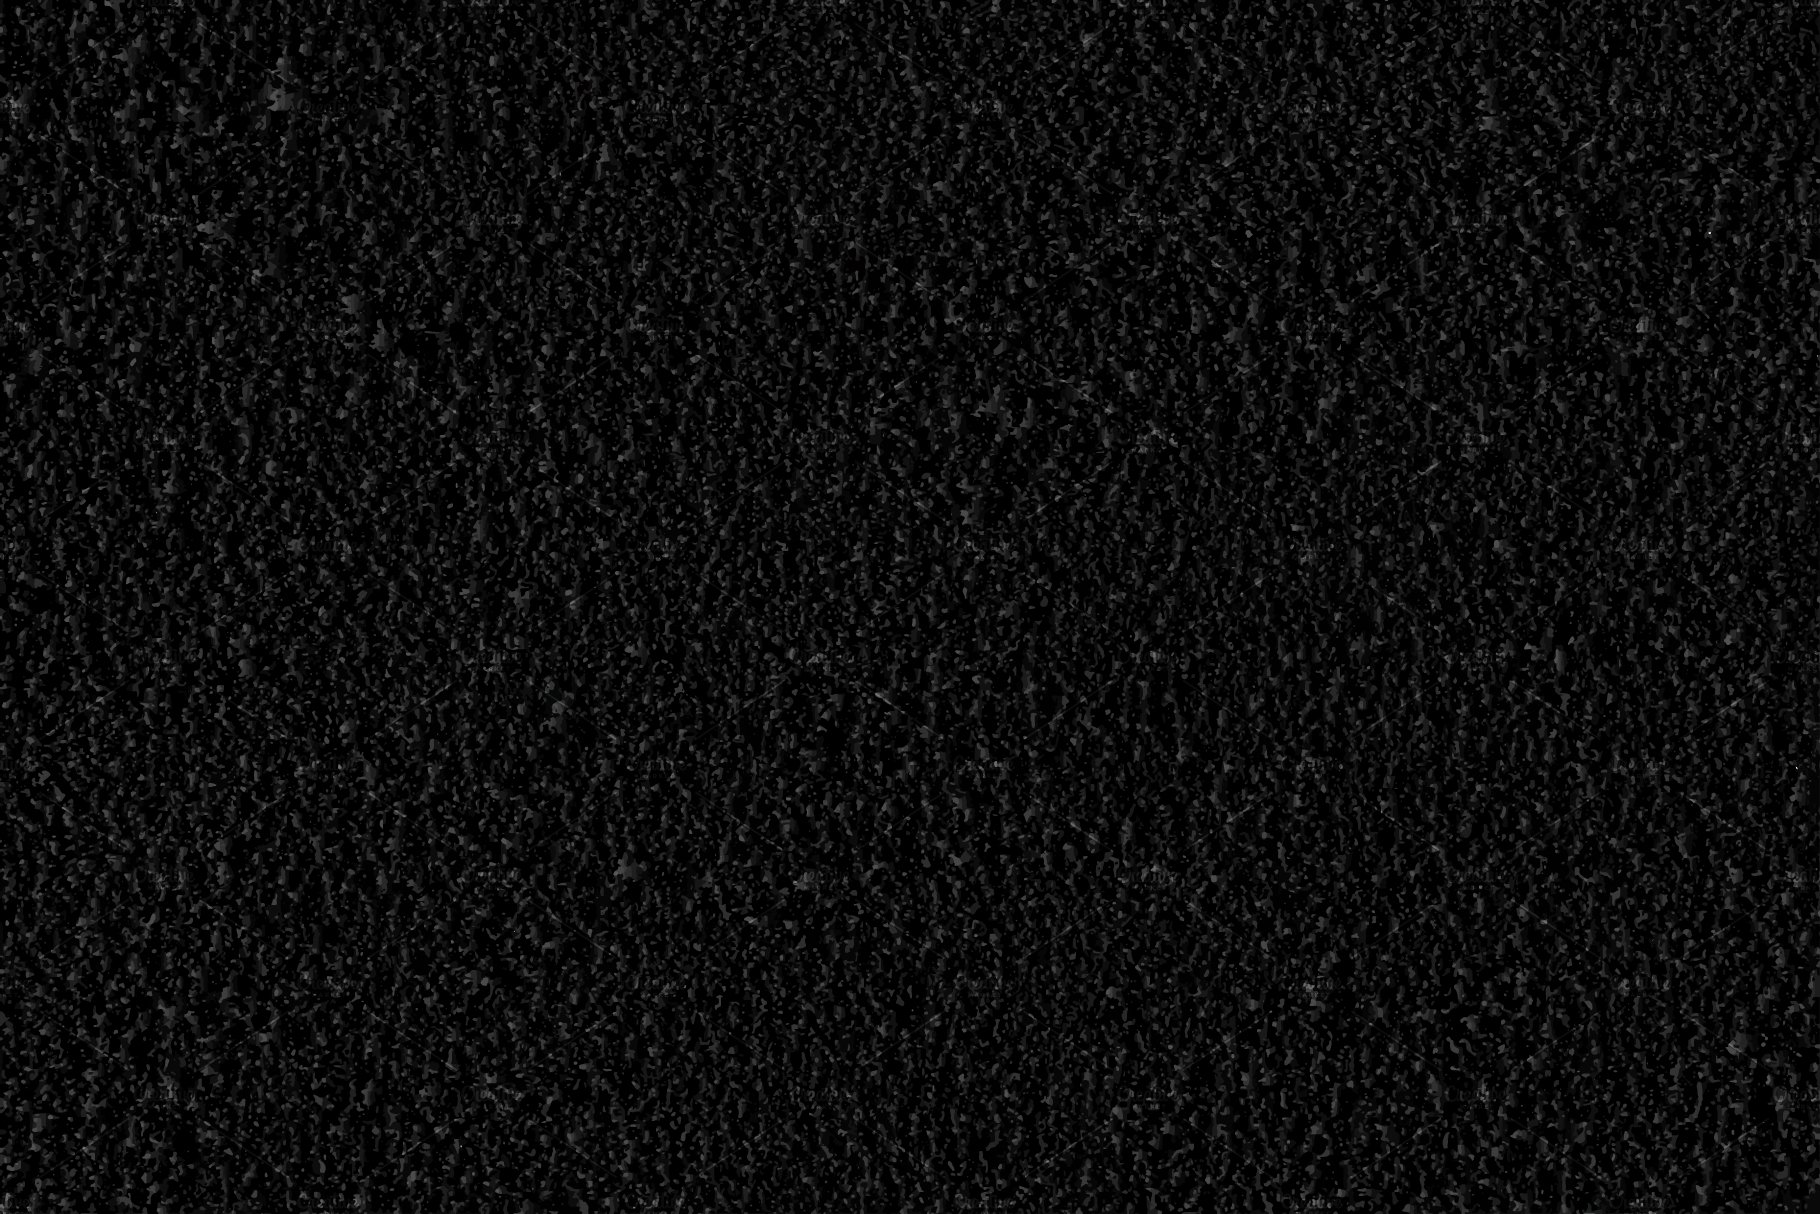 Dark Black Textured Background cover image.